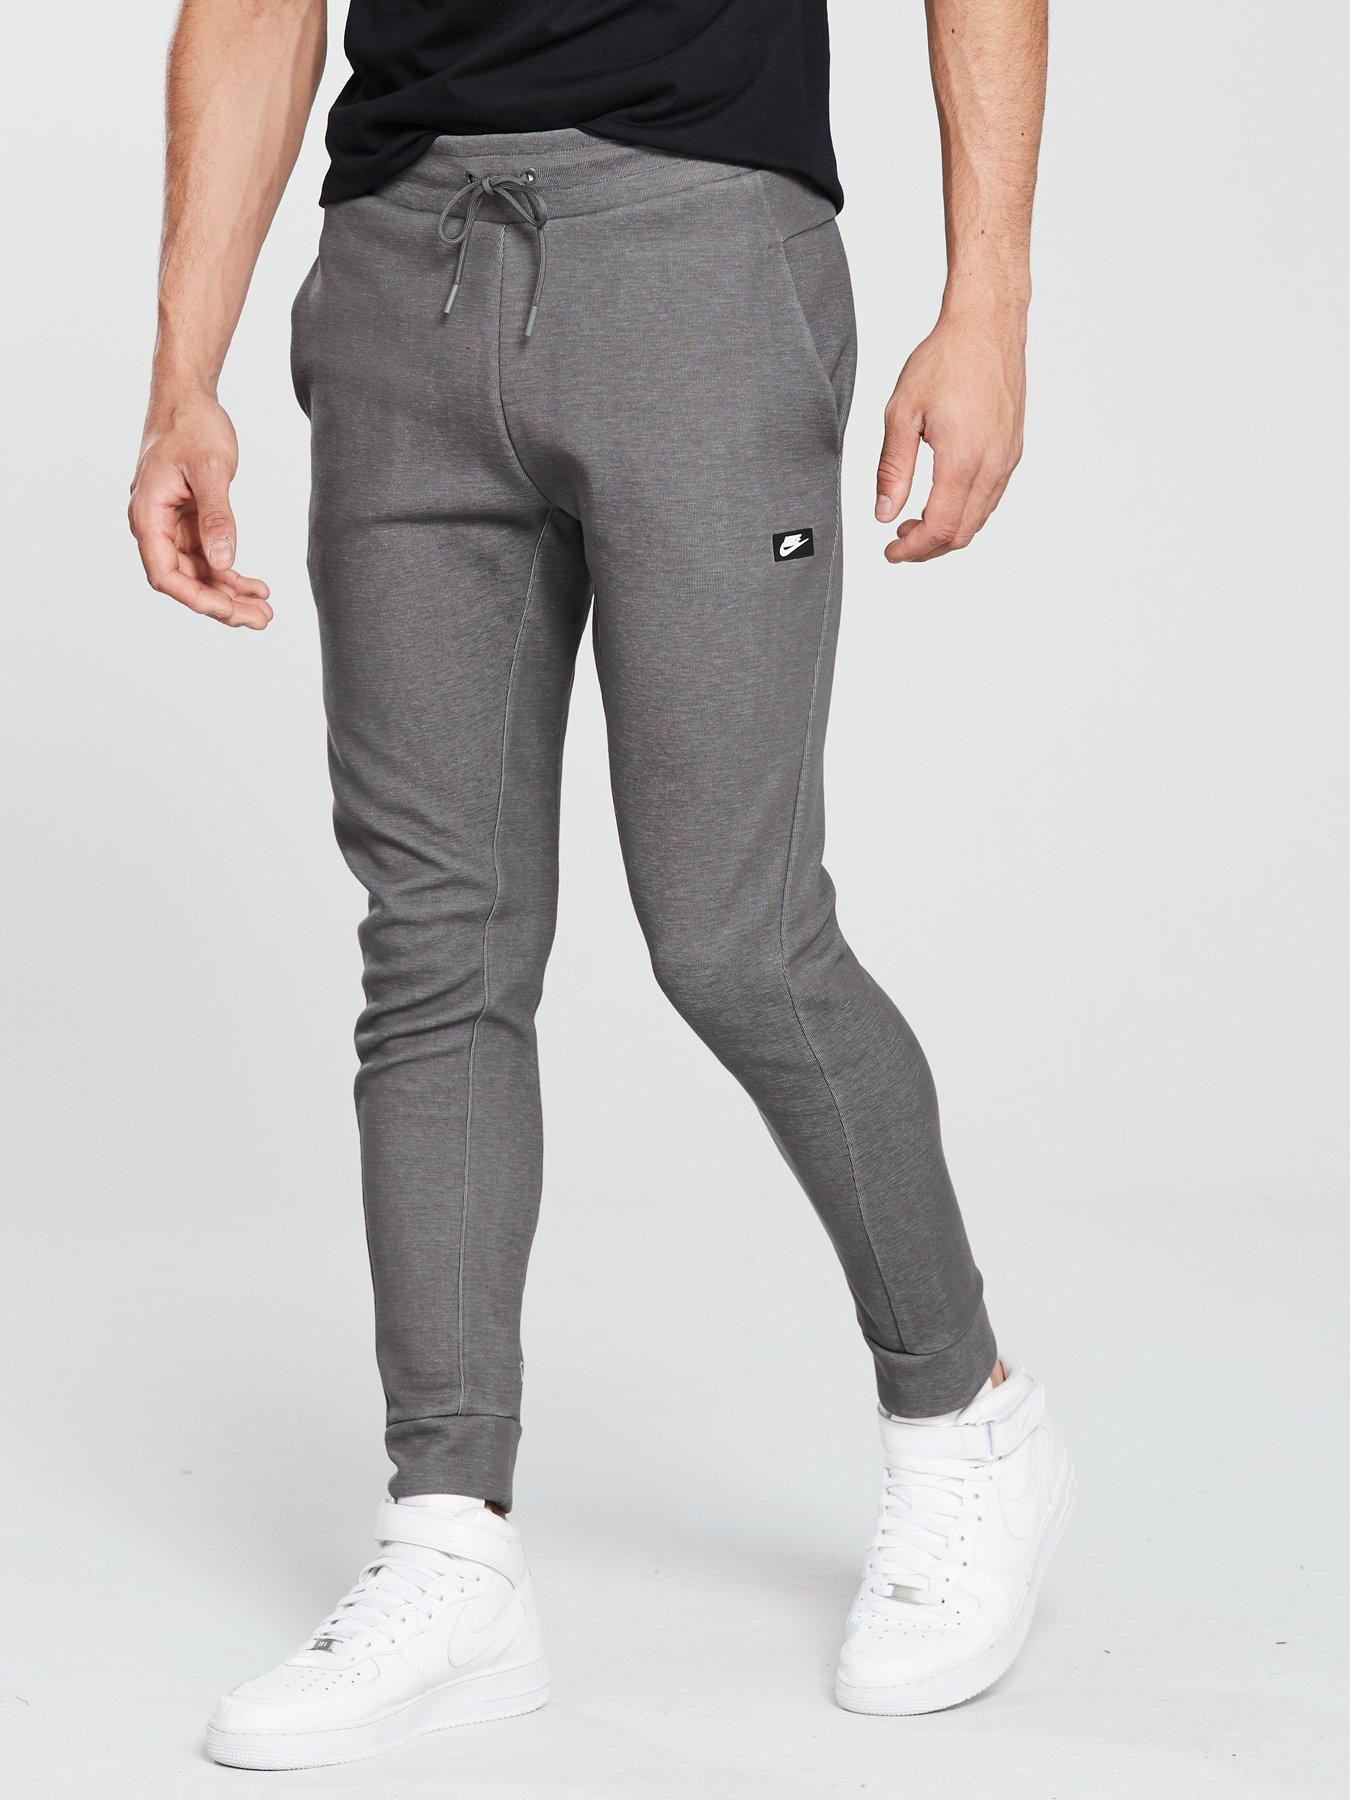 grey nike sweatpants sale